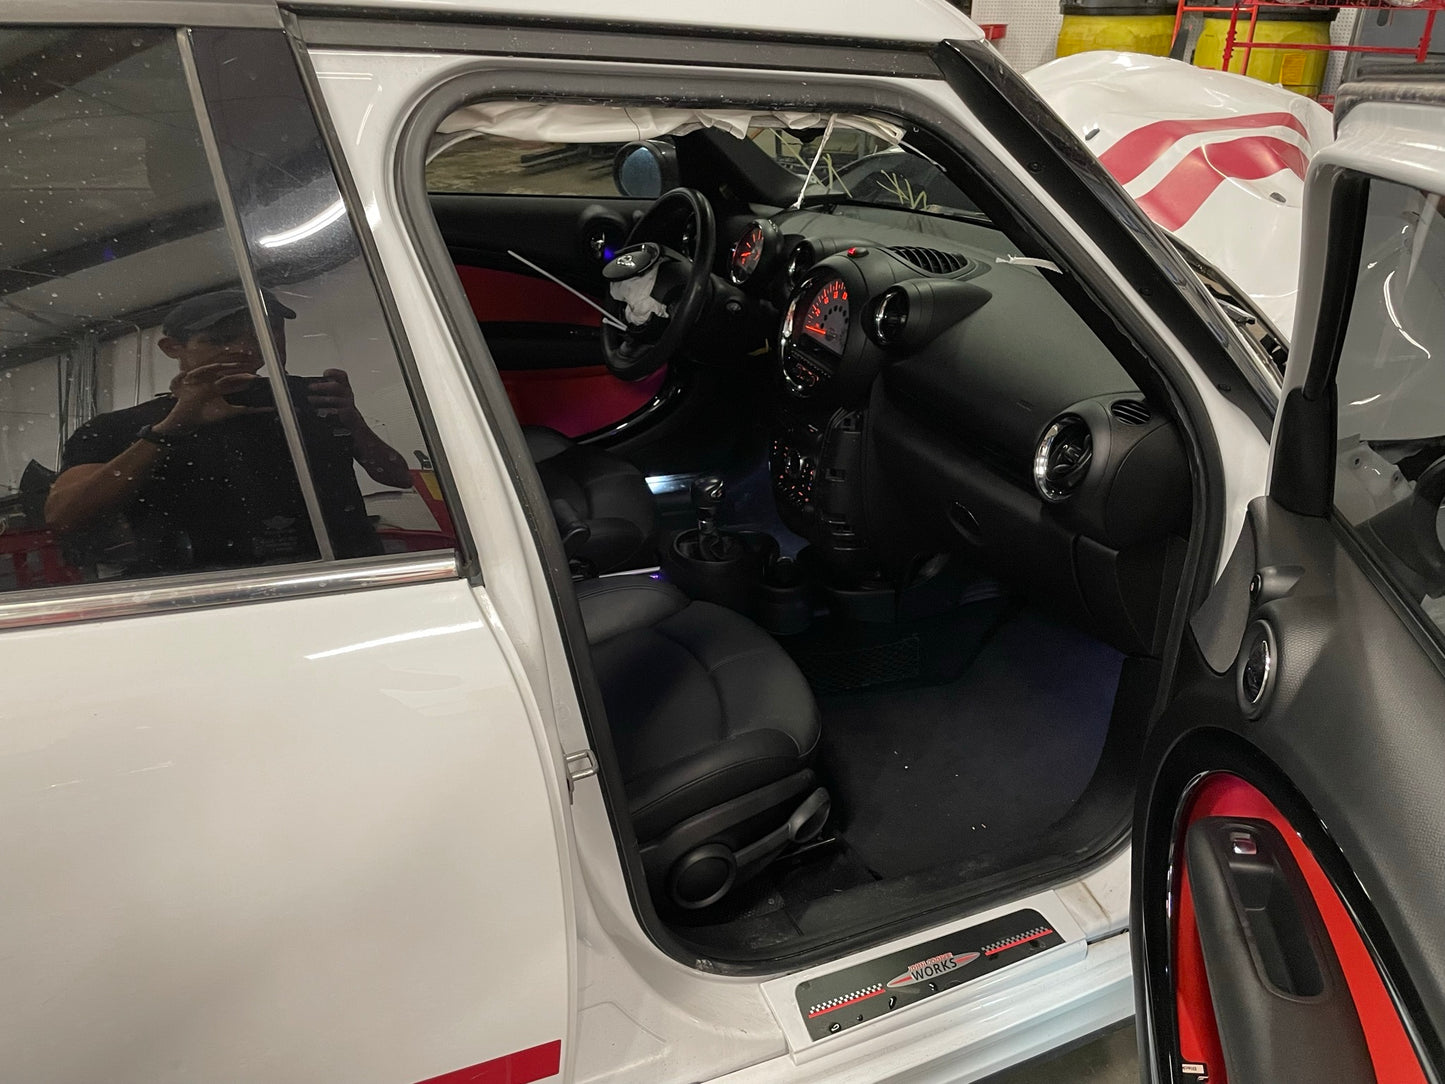 2014 MINI Cooper Countryman S, New Parts Car (April 2022) Stk #295